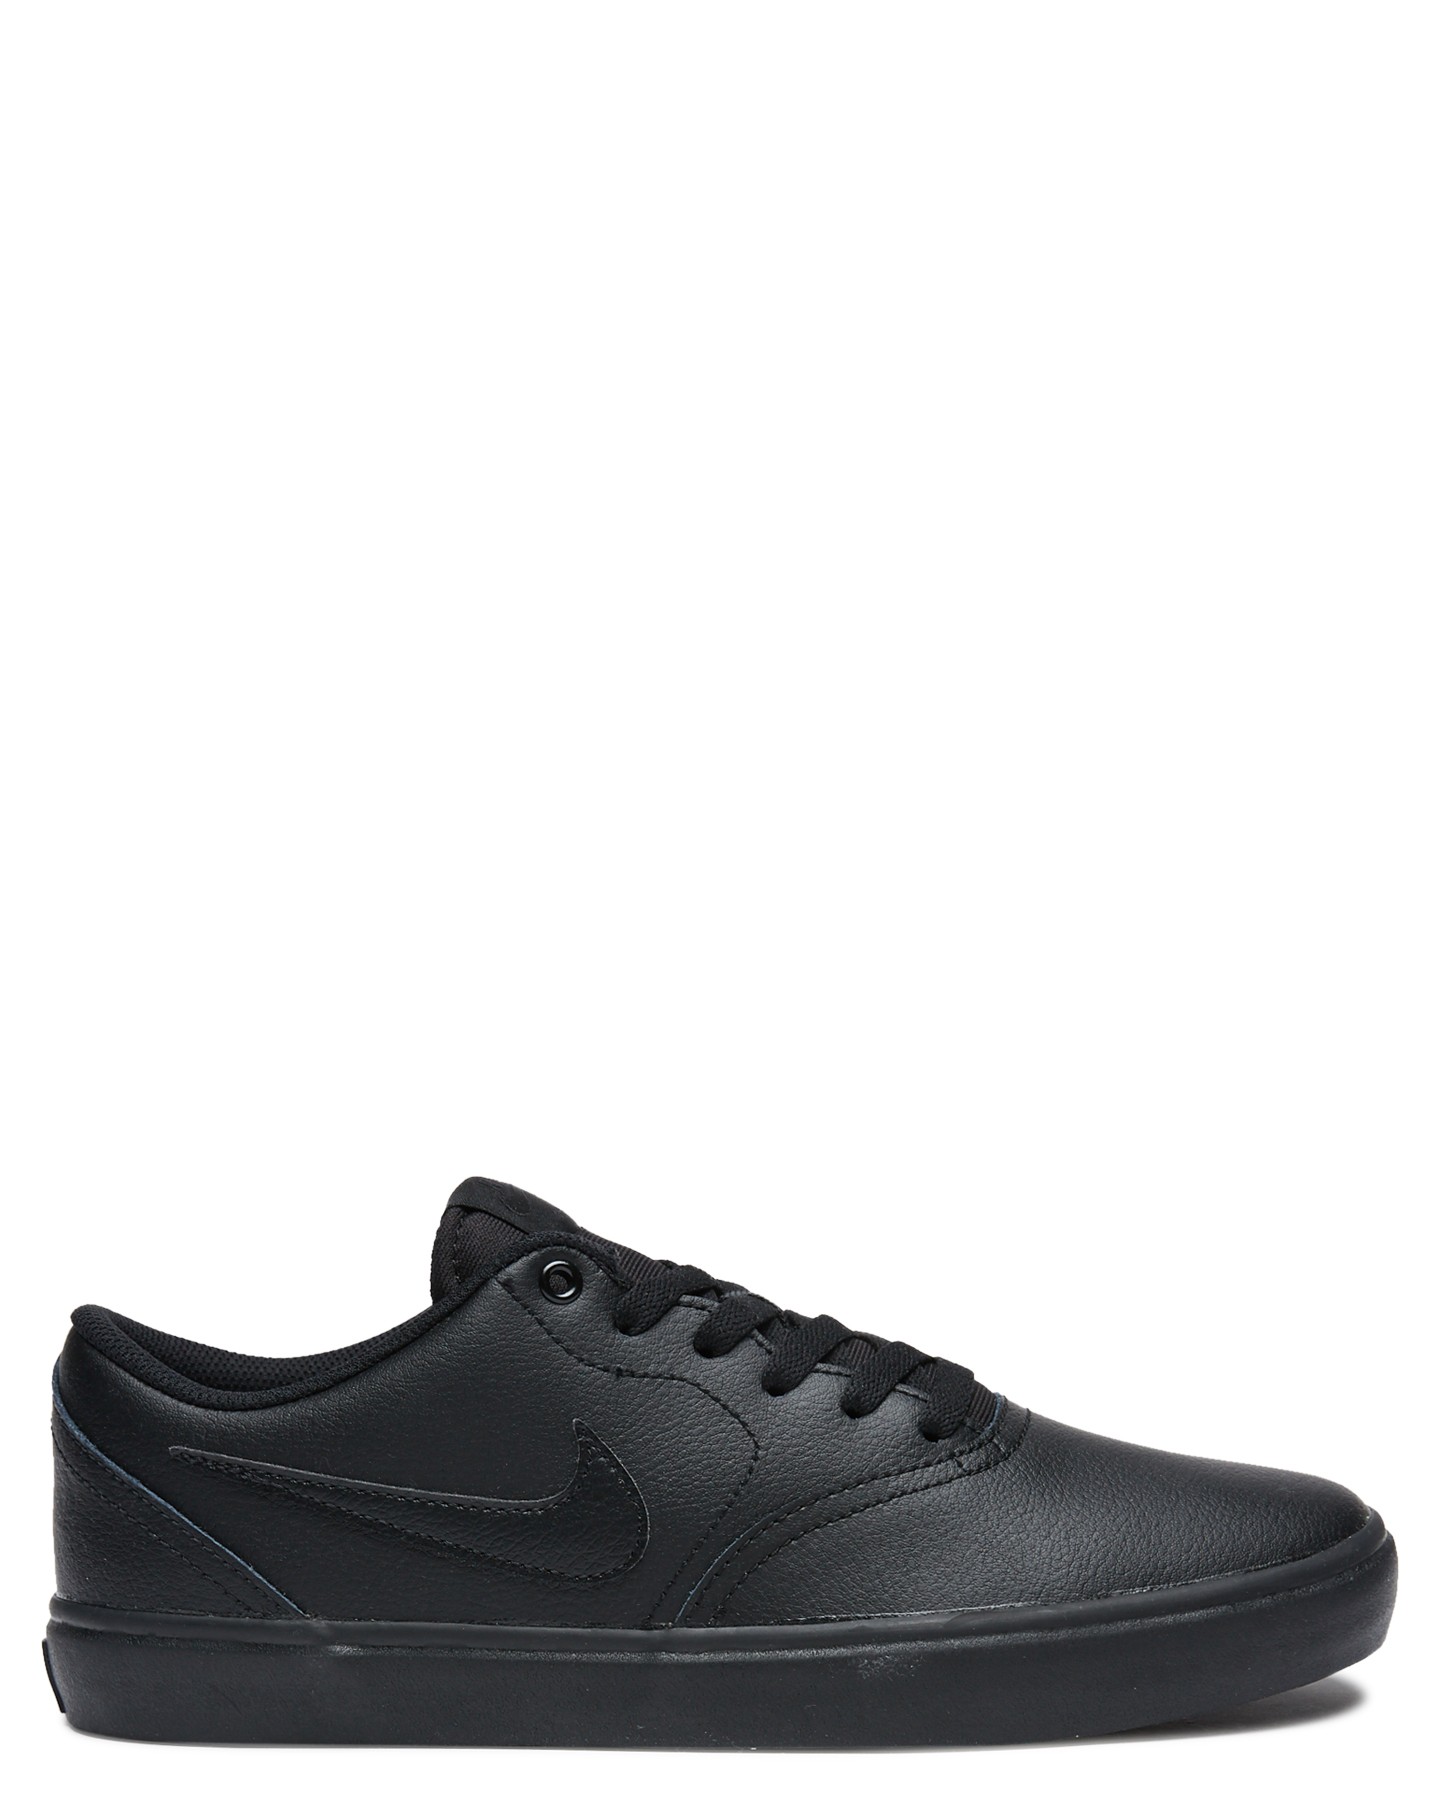 nike black leather shoes australia Shop 